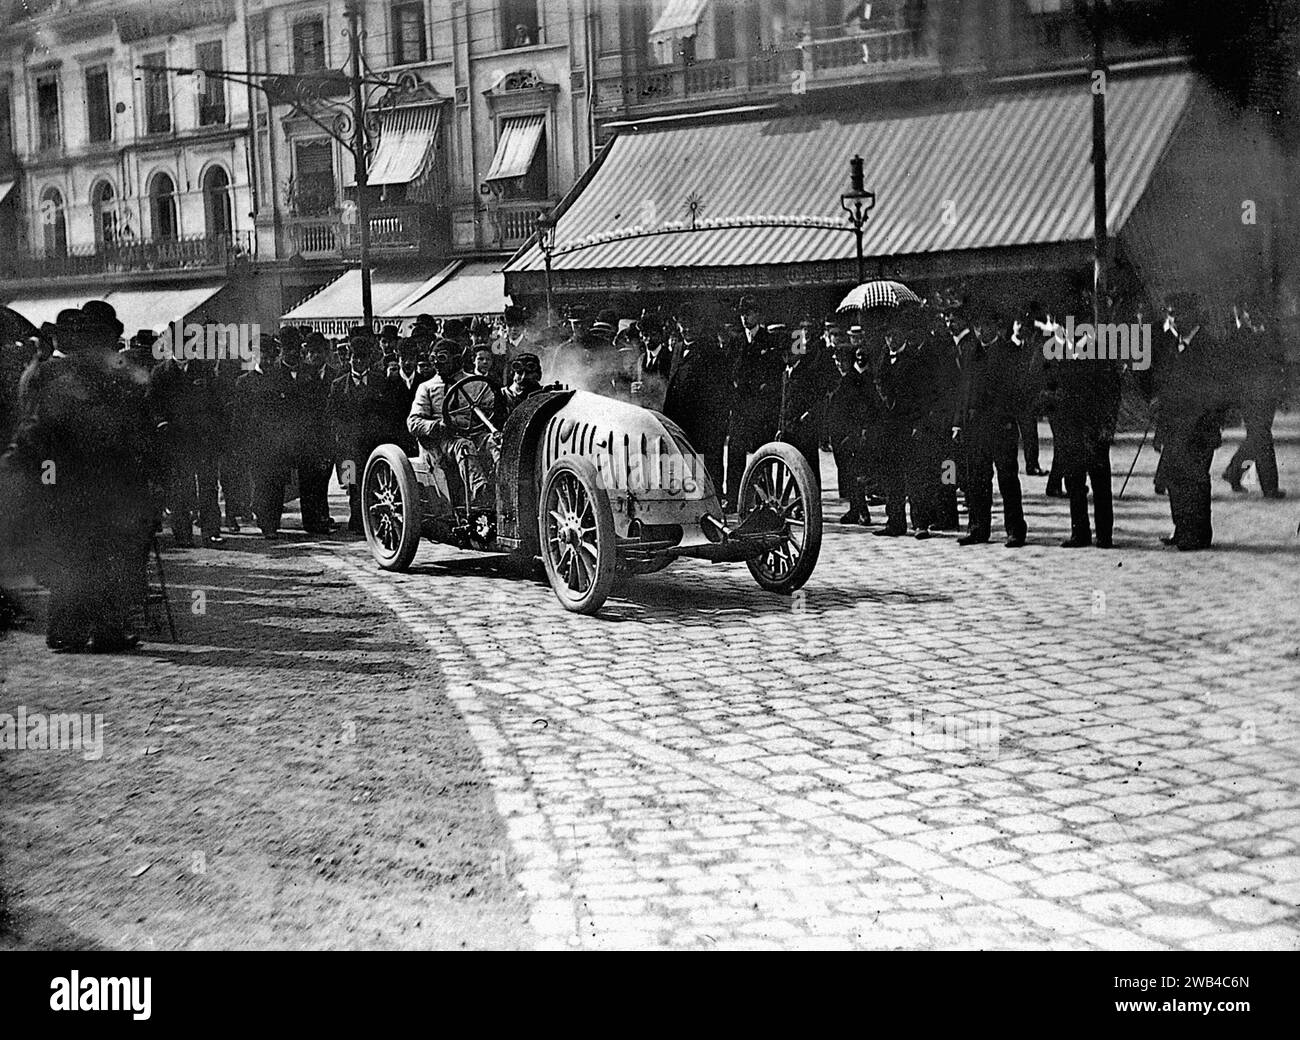 Prima edizione della 24 ore di le Mans endurance sport car race (24 heures du Mans). 26 e 27 giugno 1906. Un concorrente di fronte al "Café Gruber", Place de la République a le Mans. Foto di Jean de Biré Foto Stock